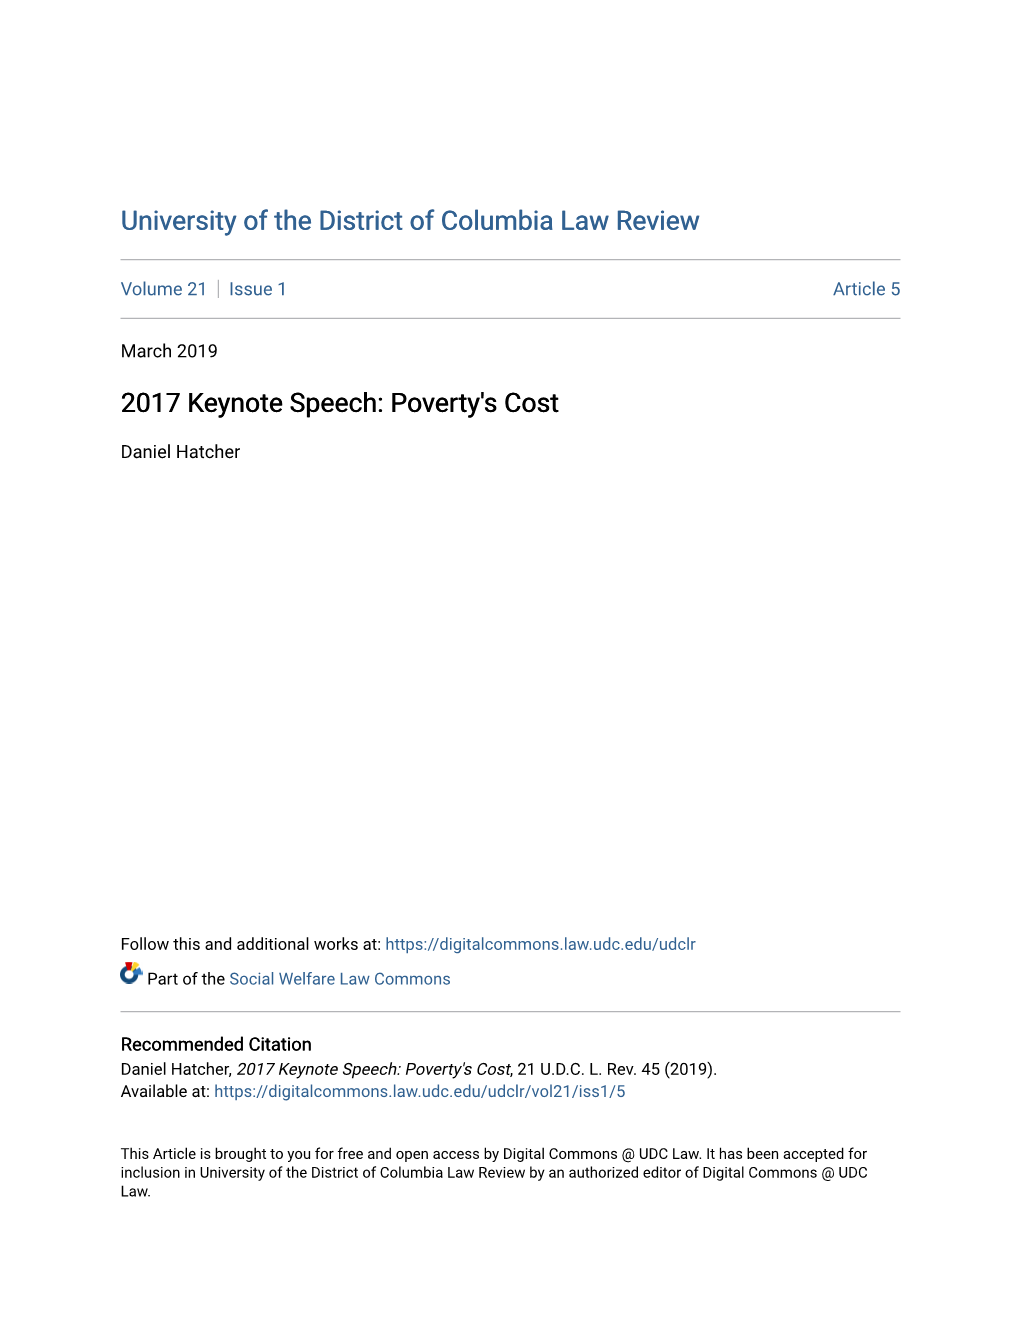 2017 Keynote Speech: Poverty's Cost